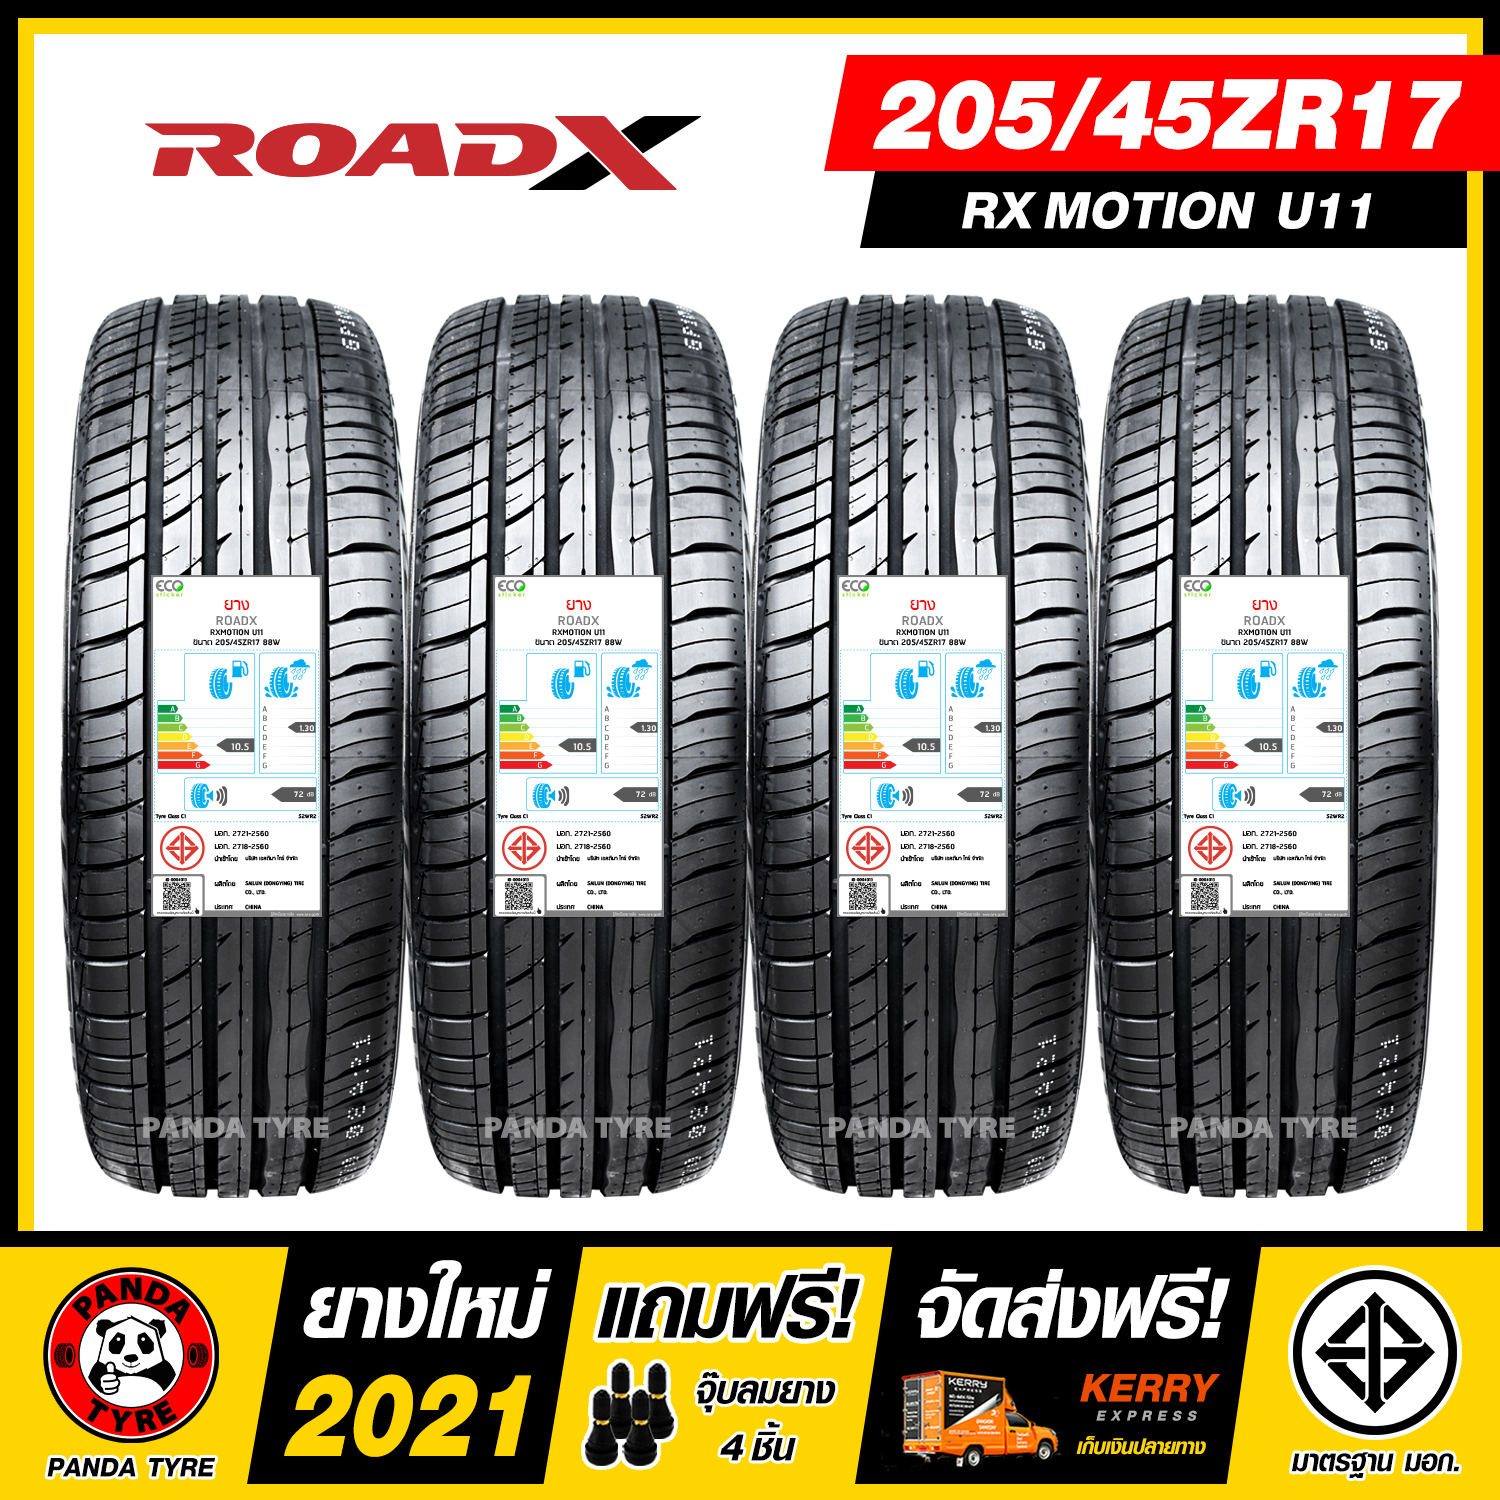 ROADX 205/45R17 ยางรถยนต์ขอบ17 รุ่น RX MOTION U11 - 4 เส้น (ยางใหม่ผลิตปี 2021)